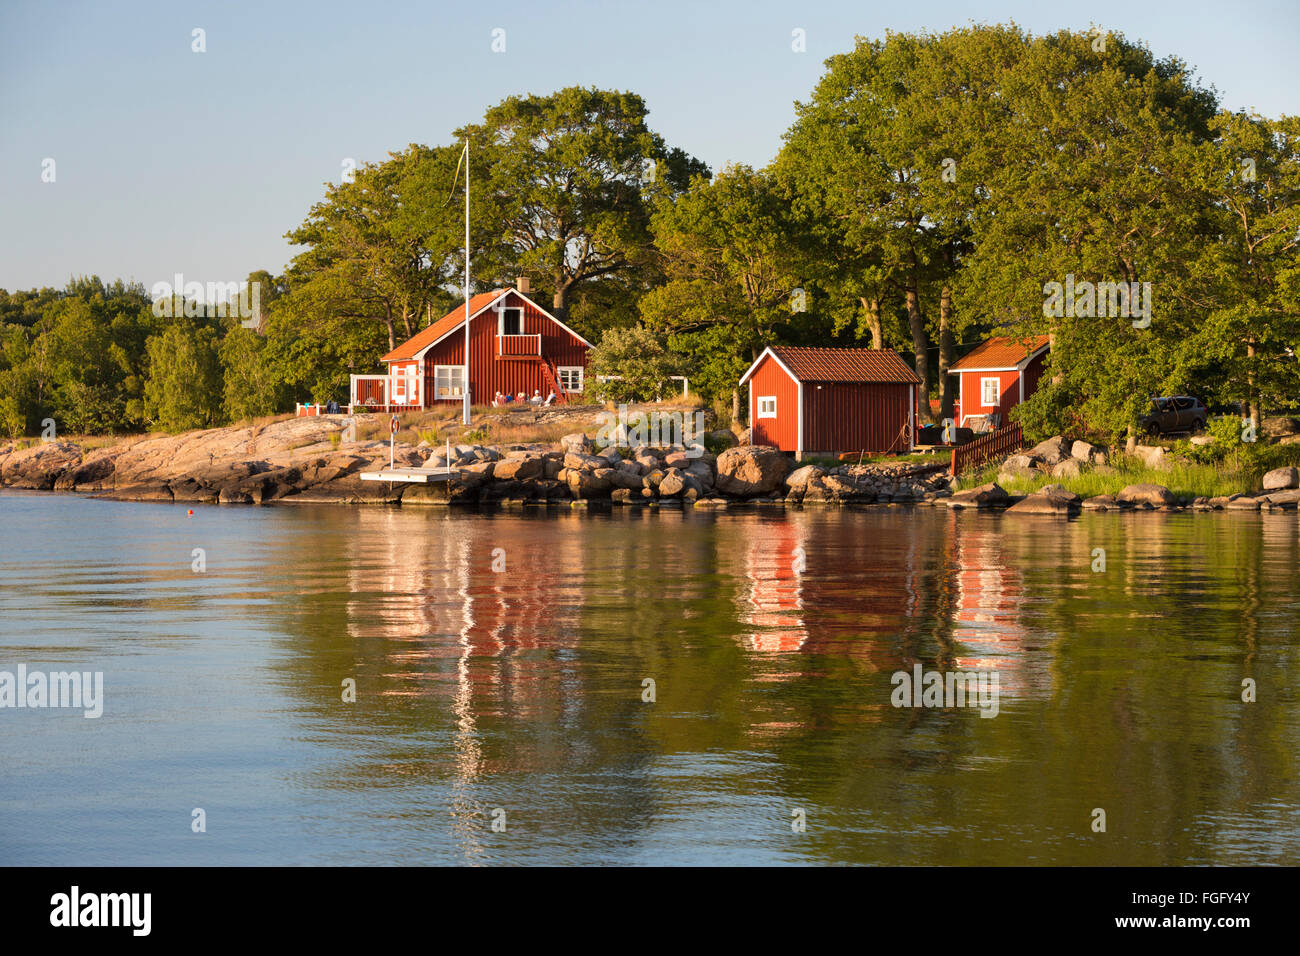 Traditional red Swedish summer house, Tjurko Island, near Karlskrona, Blekinge, South Sweden, Sweden, Scandinavia, Europe Stock Photo